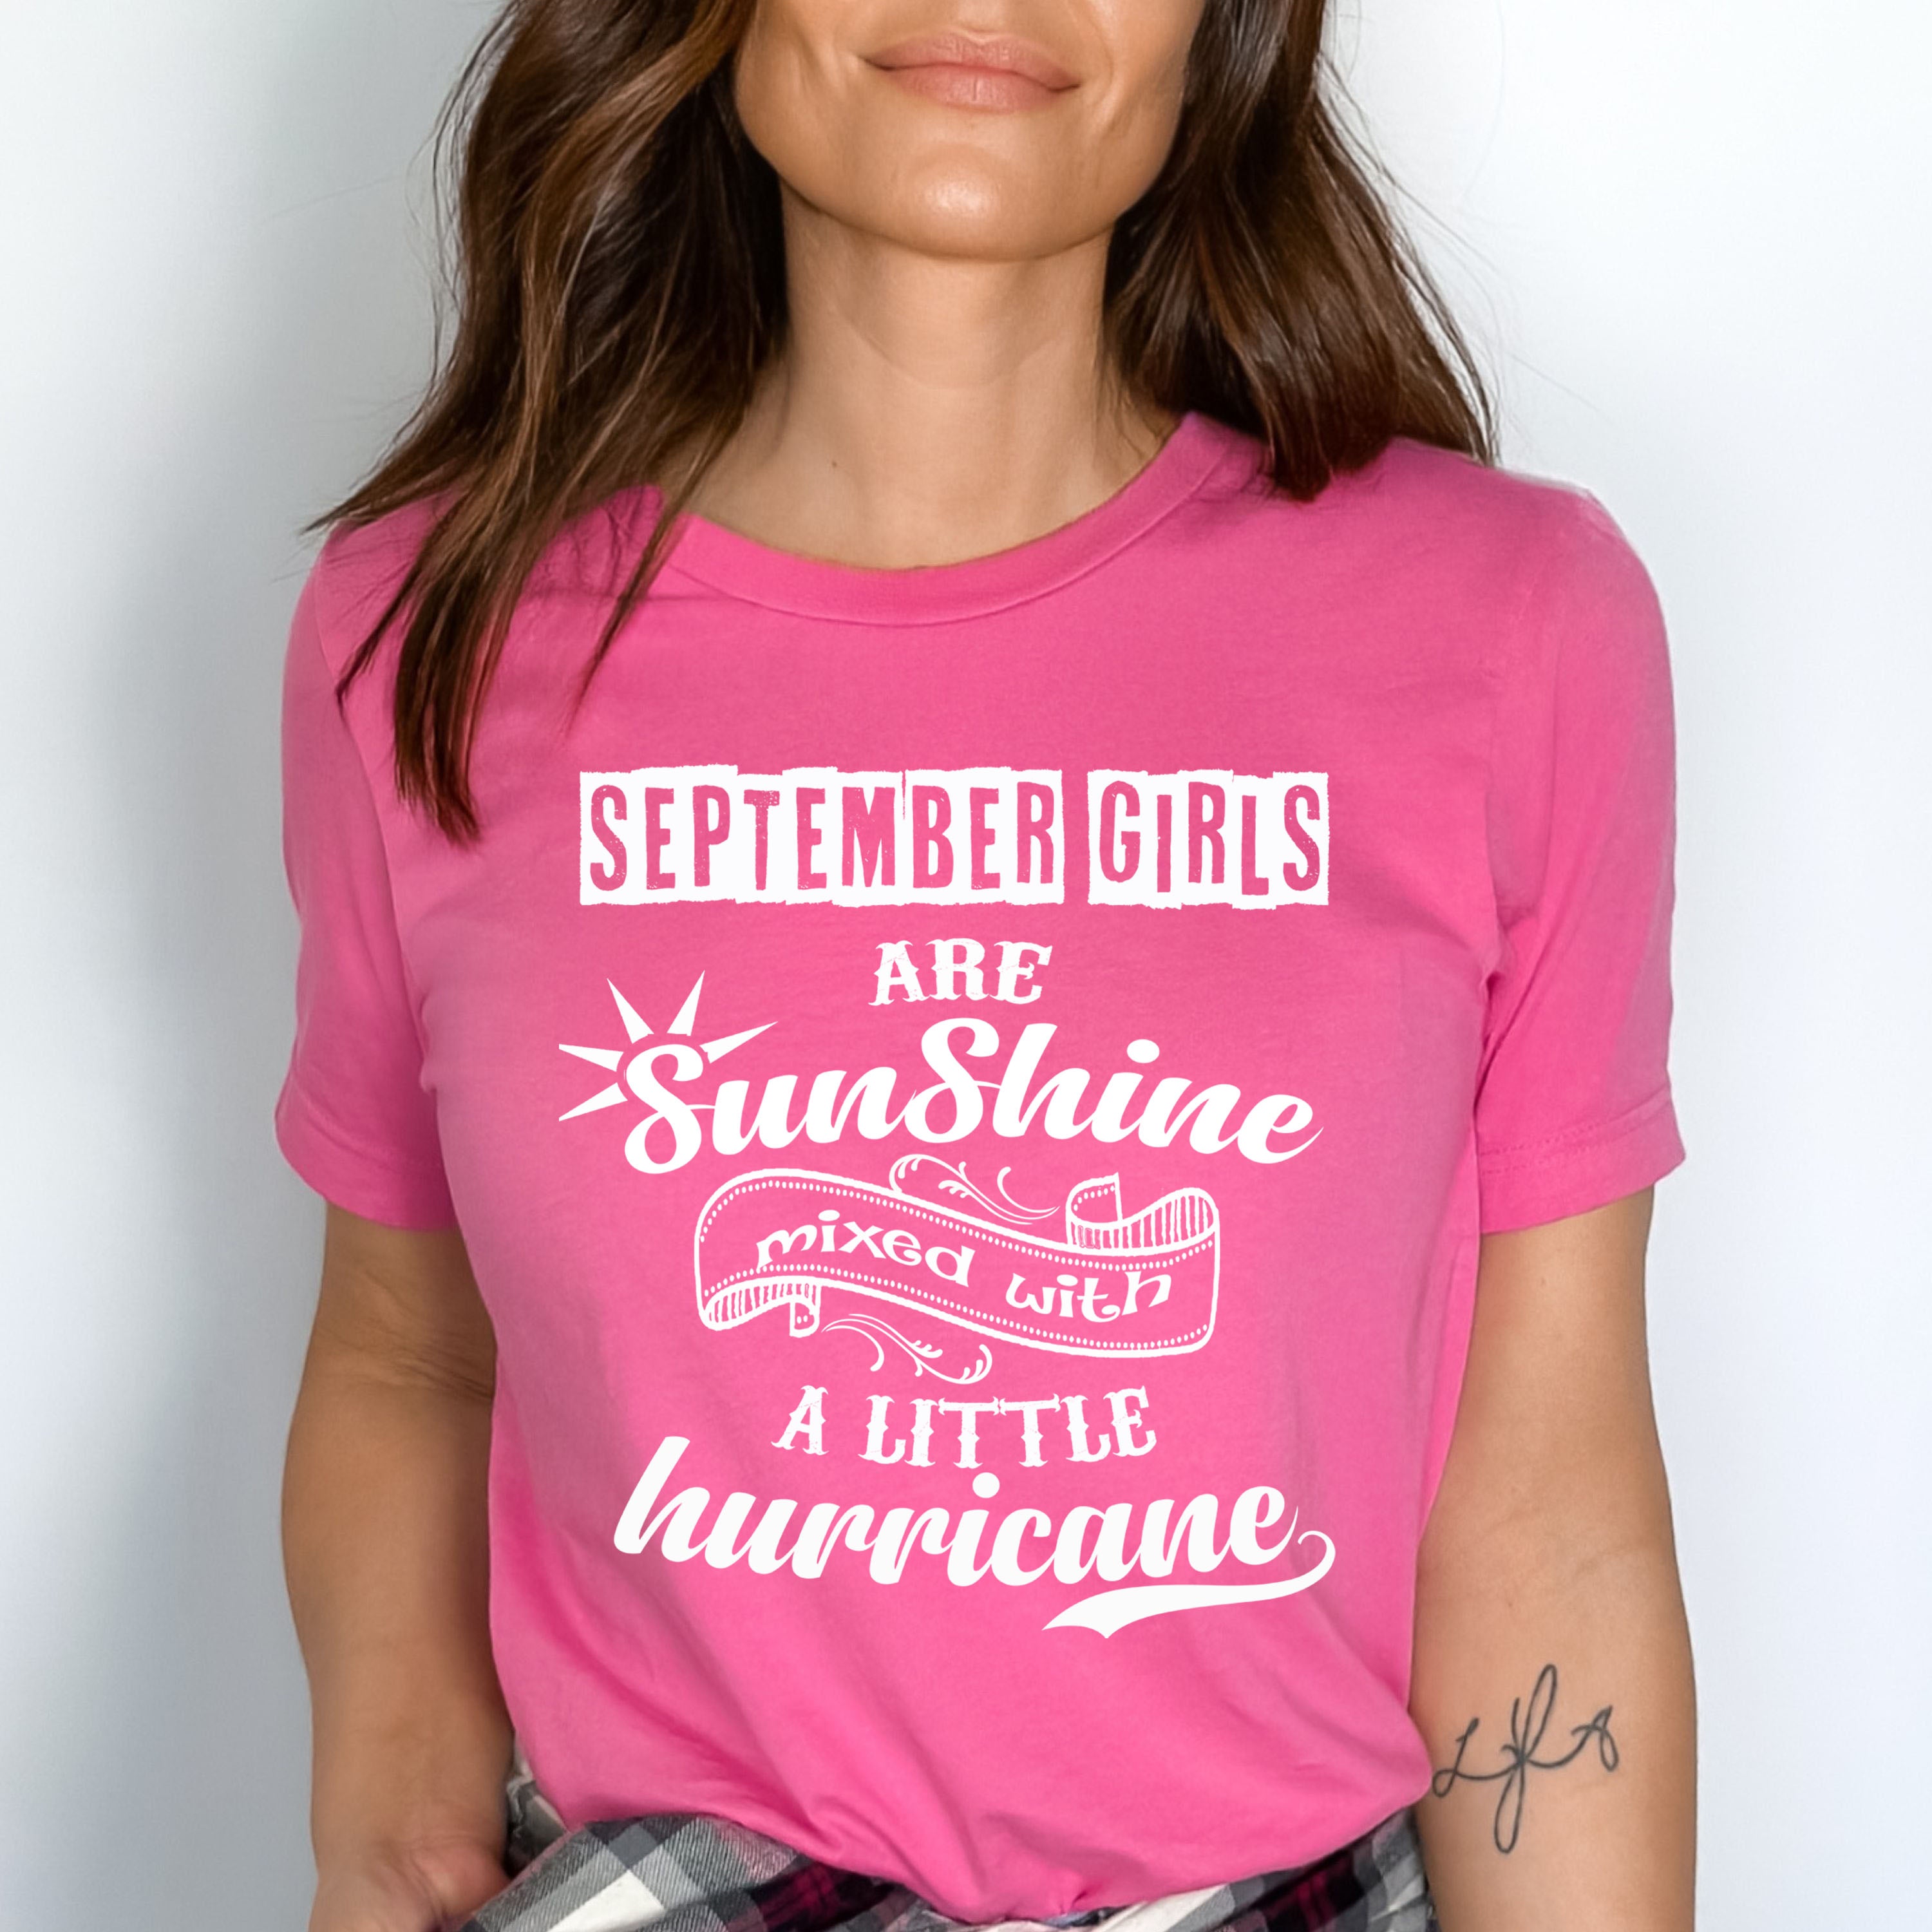 "September Girls Are Sunshine Mixed With Hurricane"